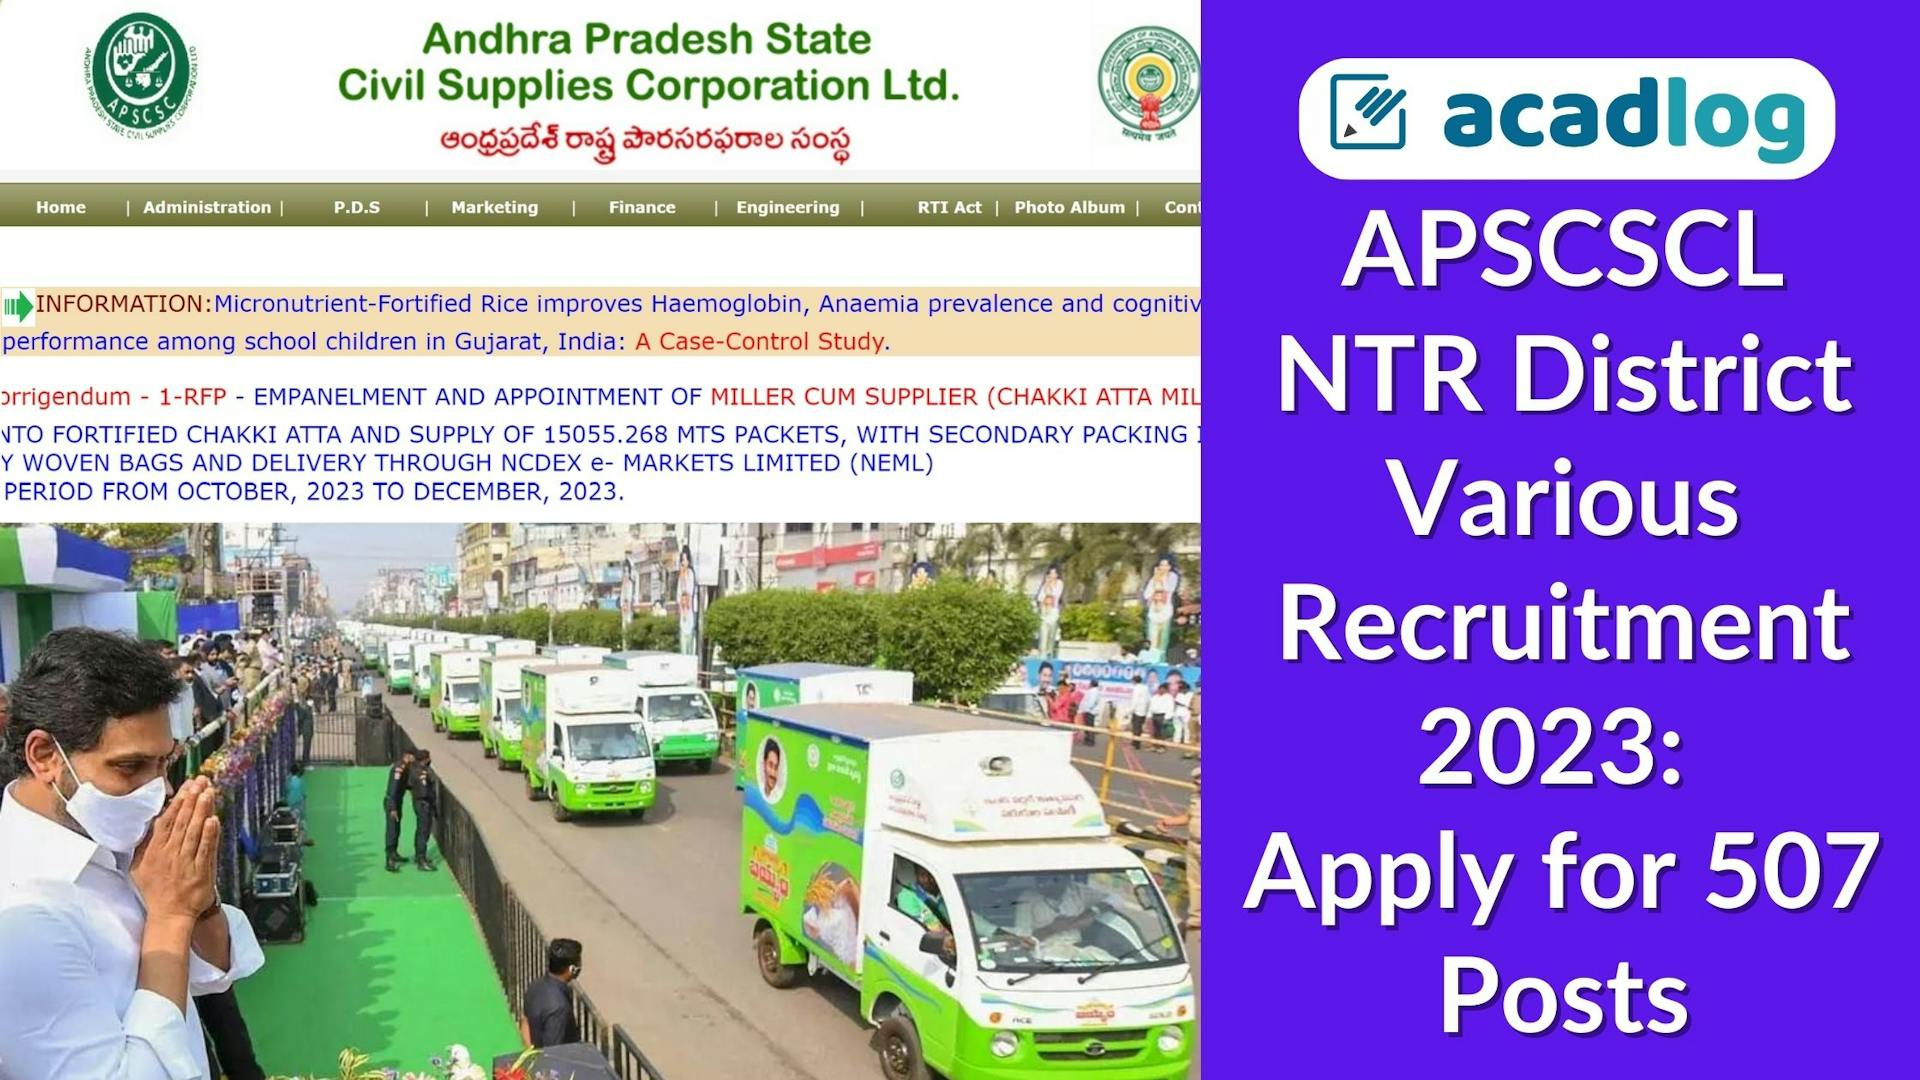 APSCSCL NTR District Various Recruitment 2023: Apply for 507 Posts